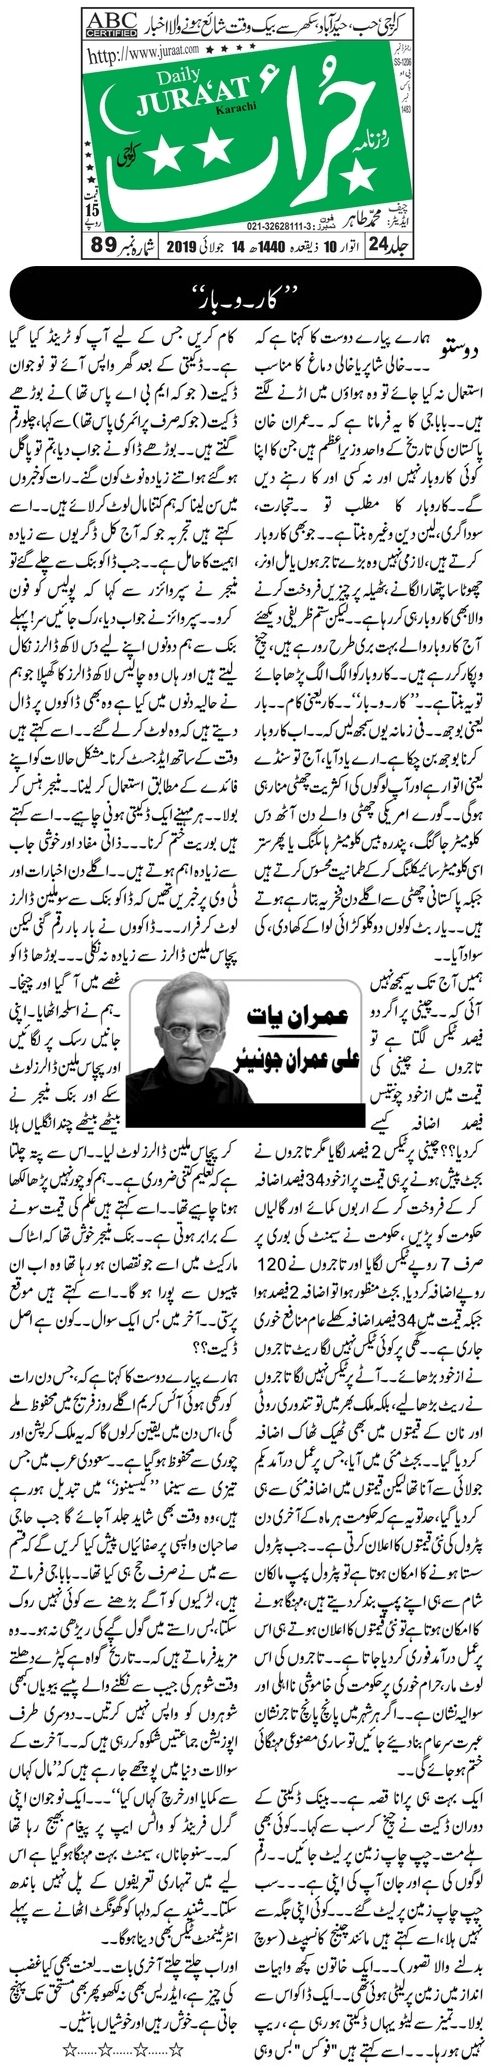 Karobar By Ali Imran Junior Imran Yaat Daily Jurrat